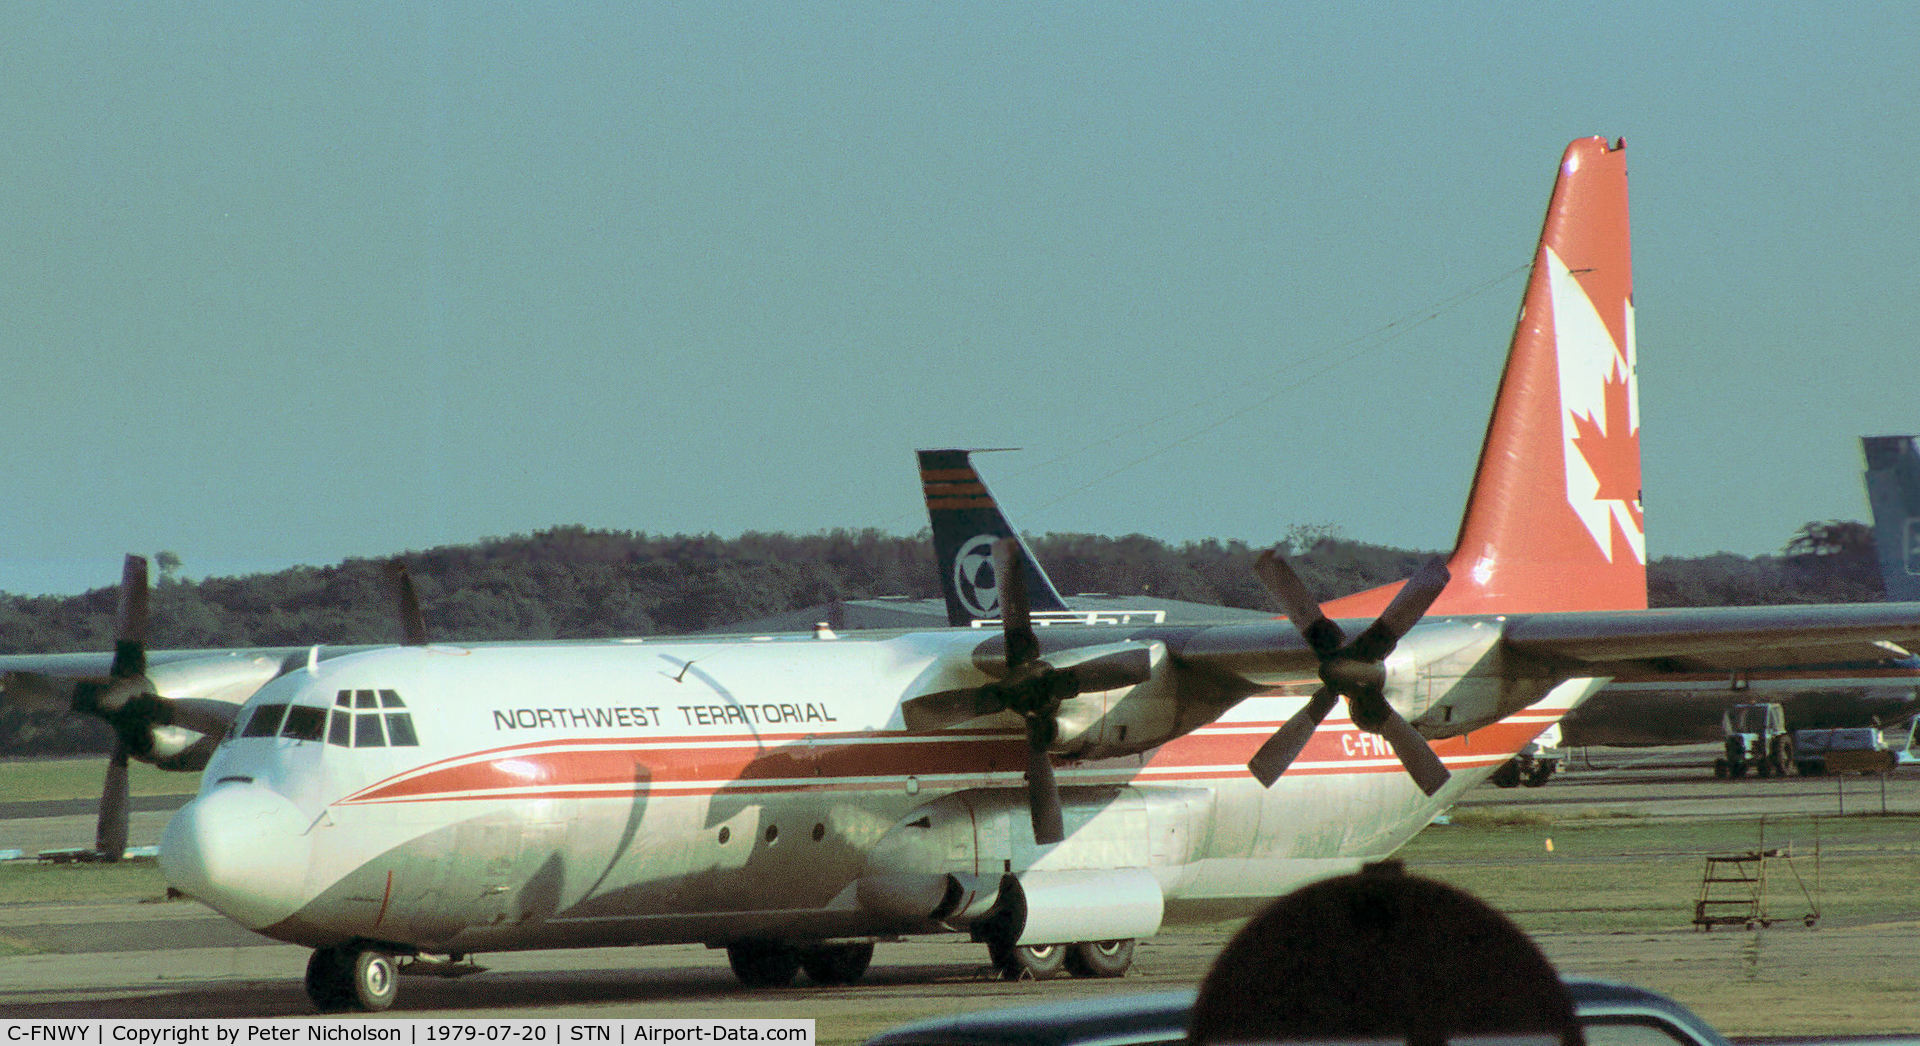 C-FNWY, 1975 Lockheed L-100-30 Hercules (L-382G) C/N 382-4600, Leased Northwest Territorial Airways L-100-30 Hercules as seen at Stansted in the Summer of 1979.